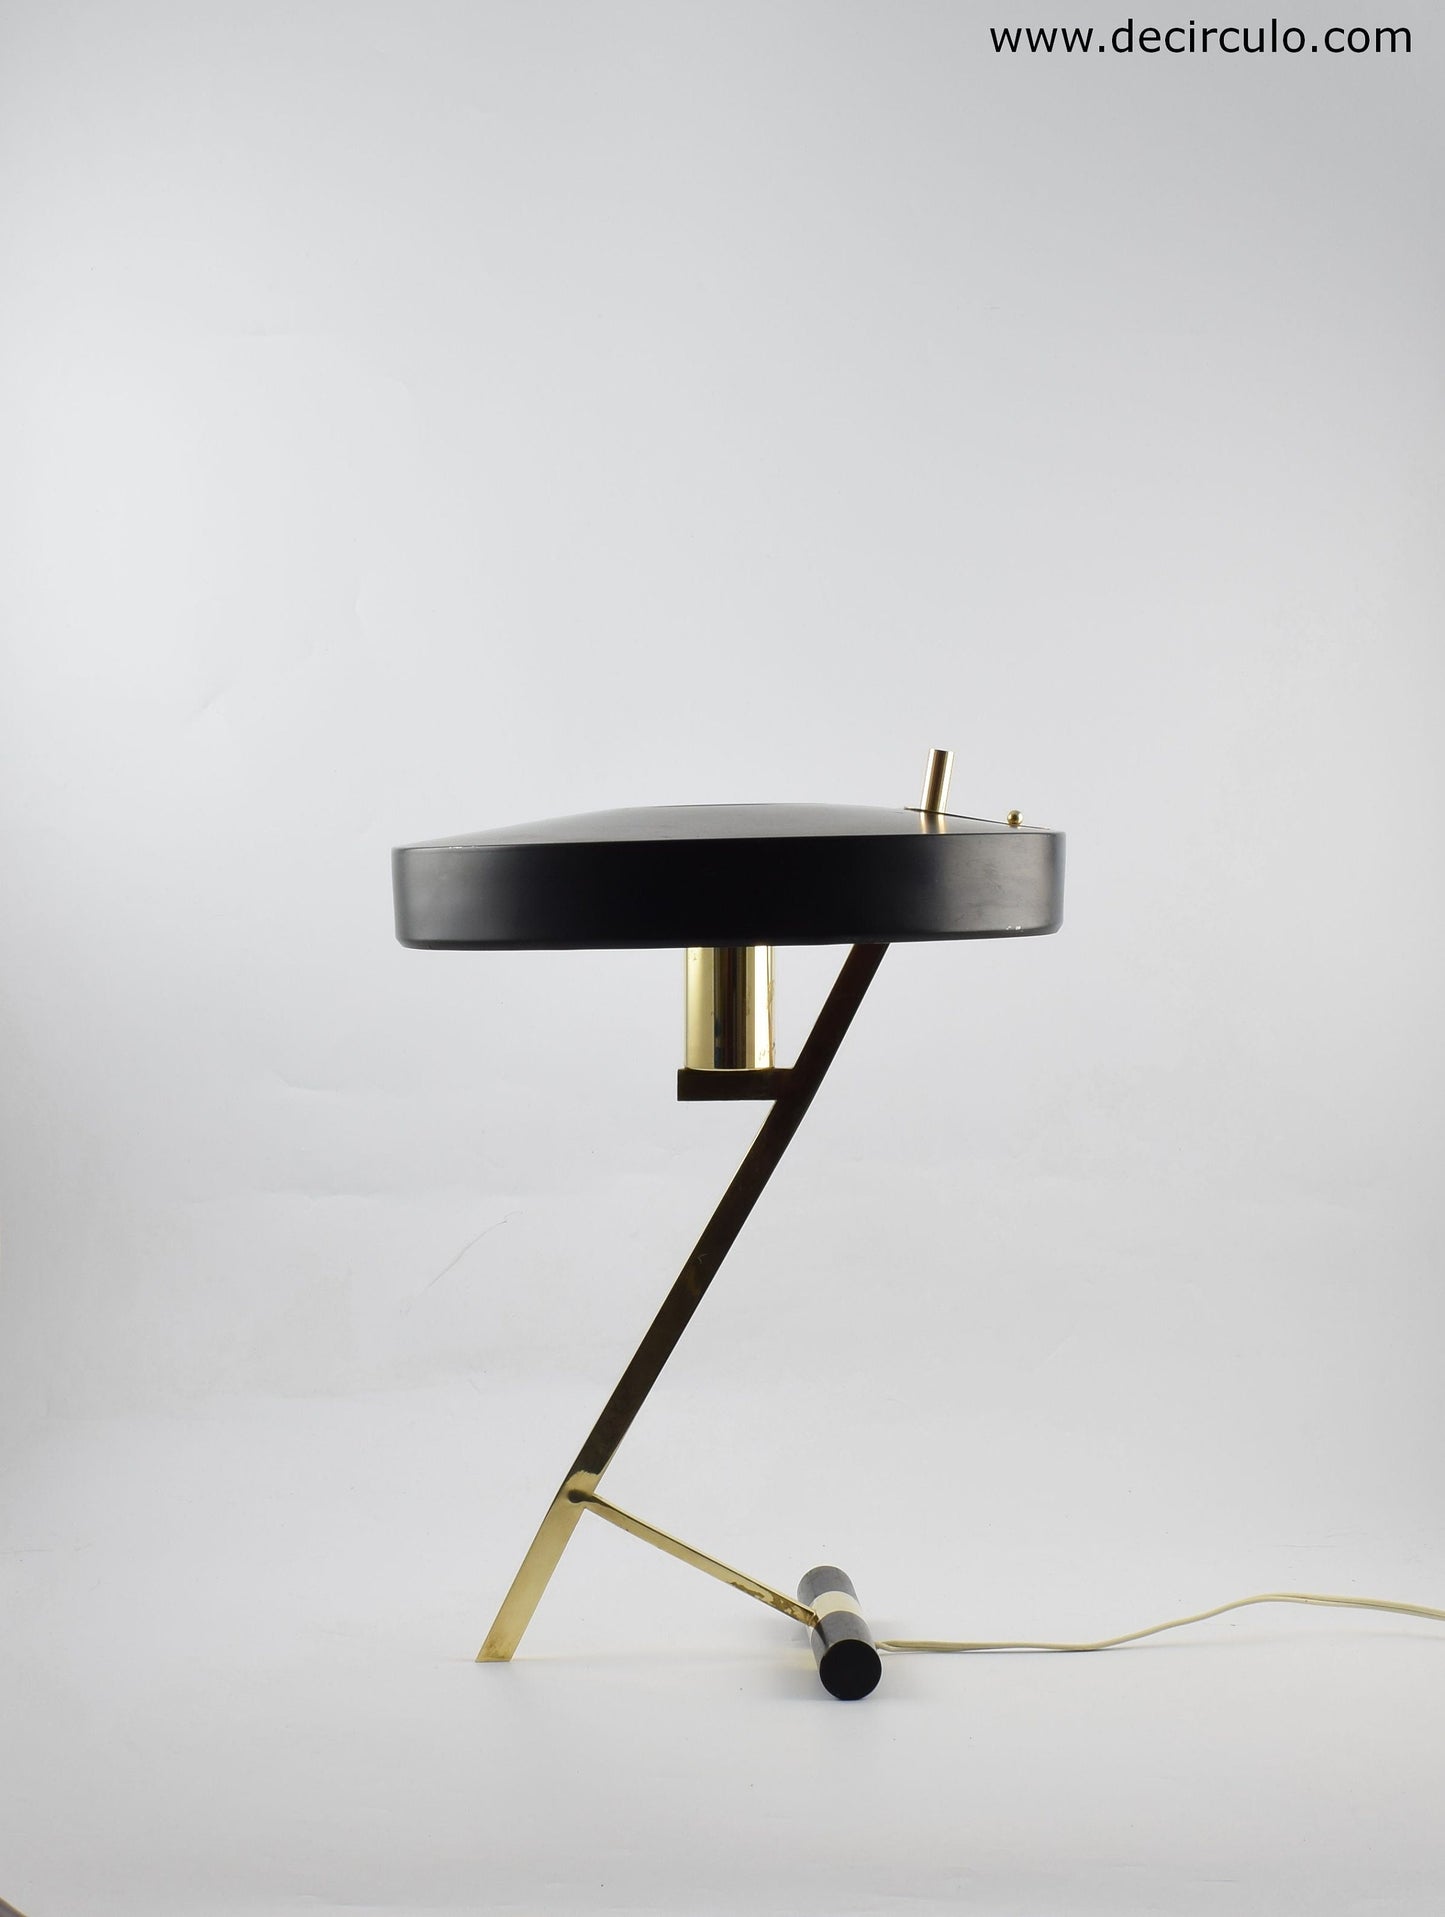 Original z-lamp industrial design masterpiece from Louis Kalff for philips lights